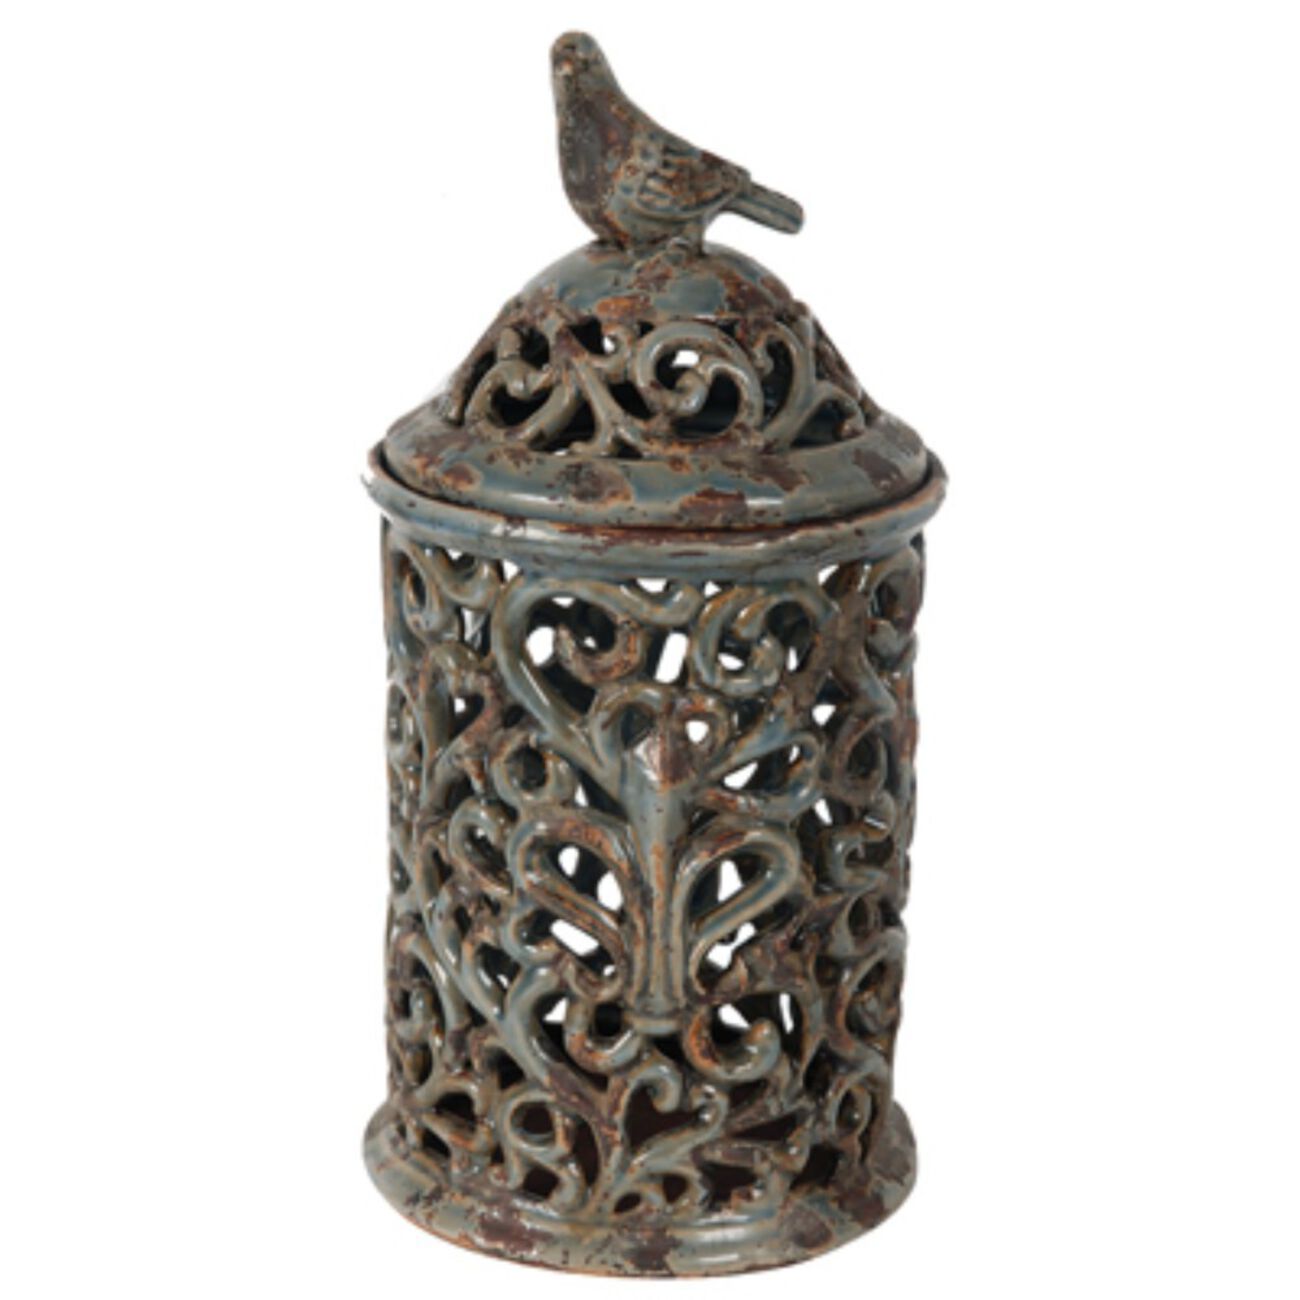 Tall Rustic Ceramic Jar with Bird Finial, Blue